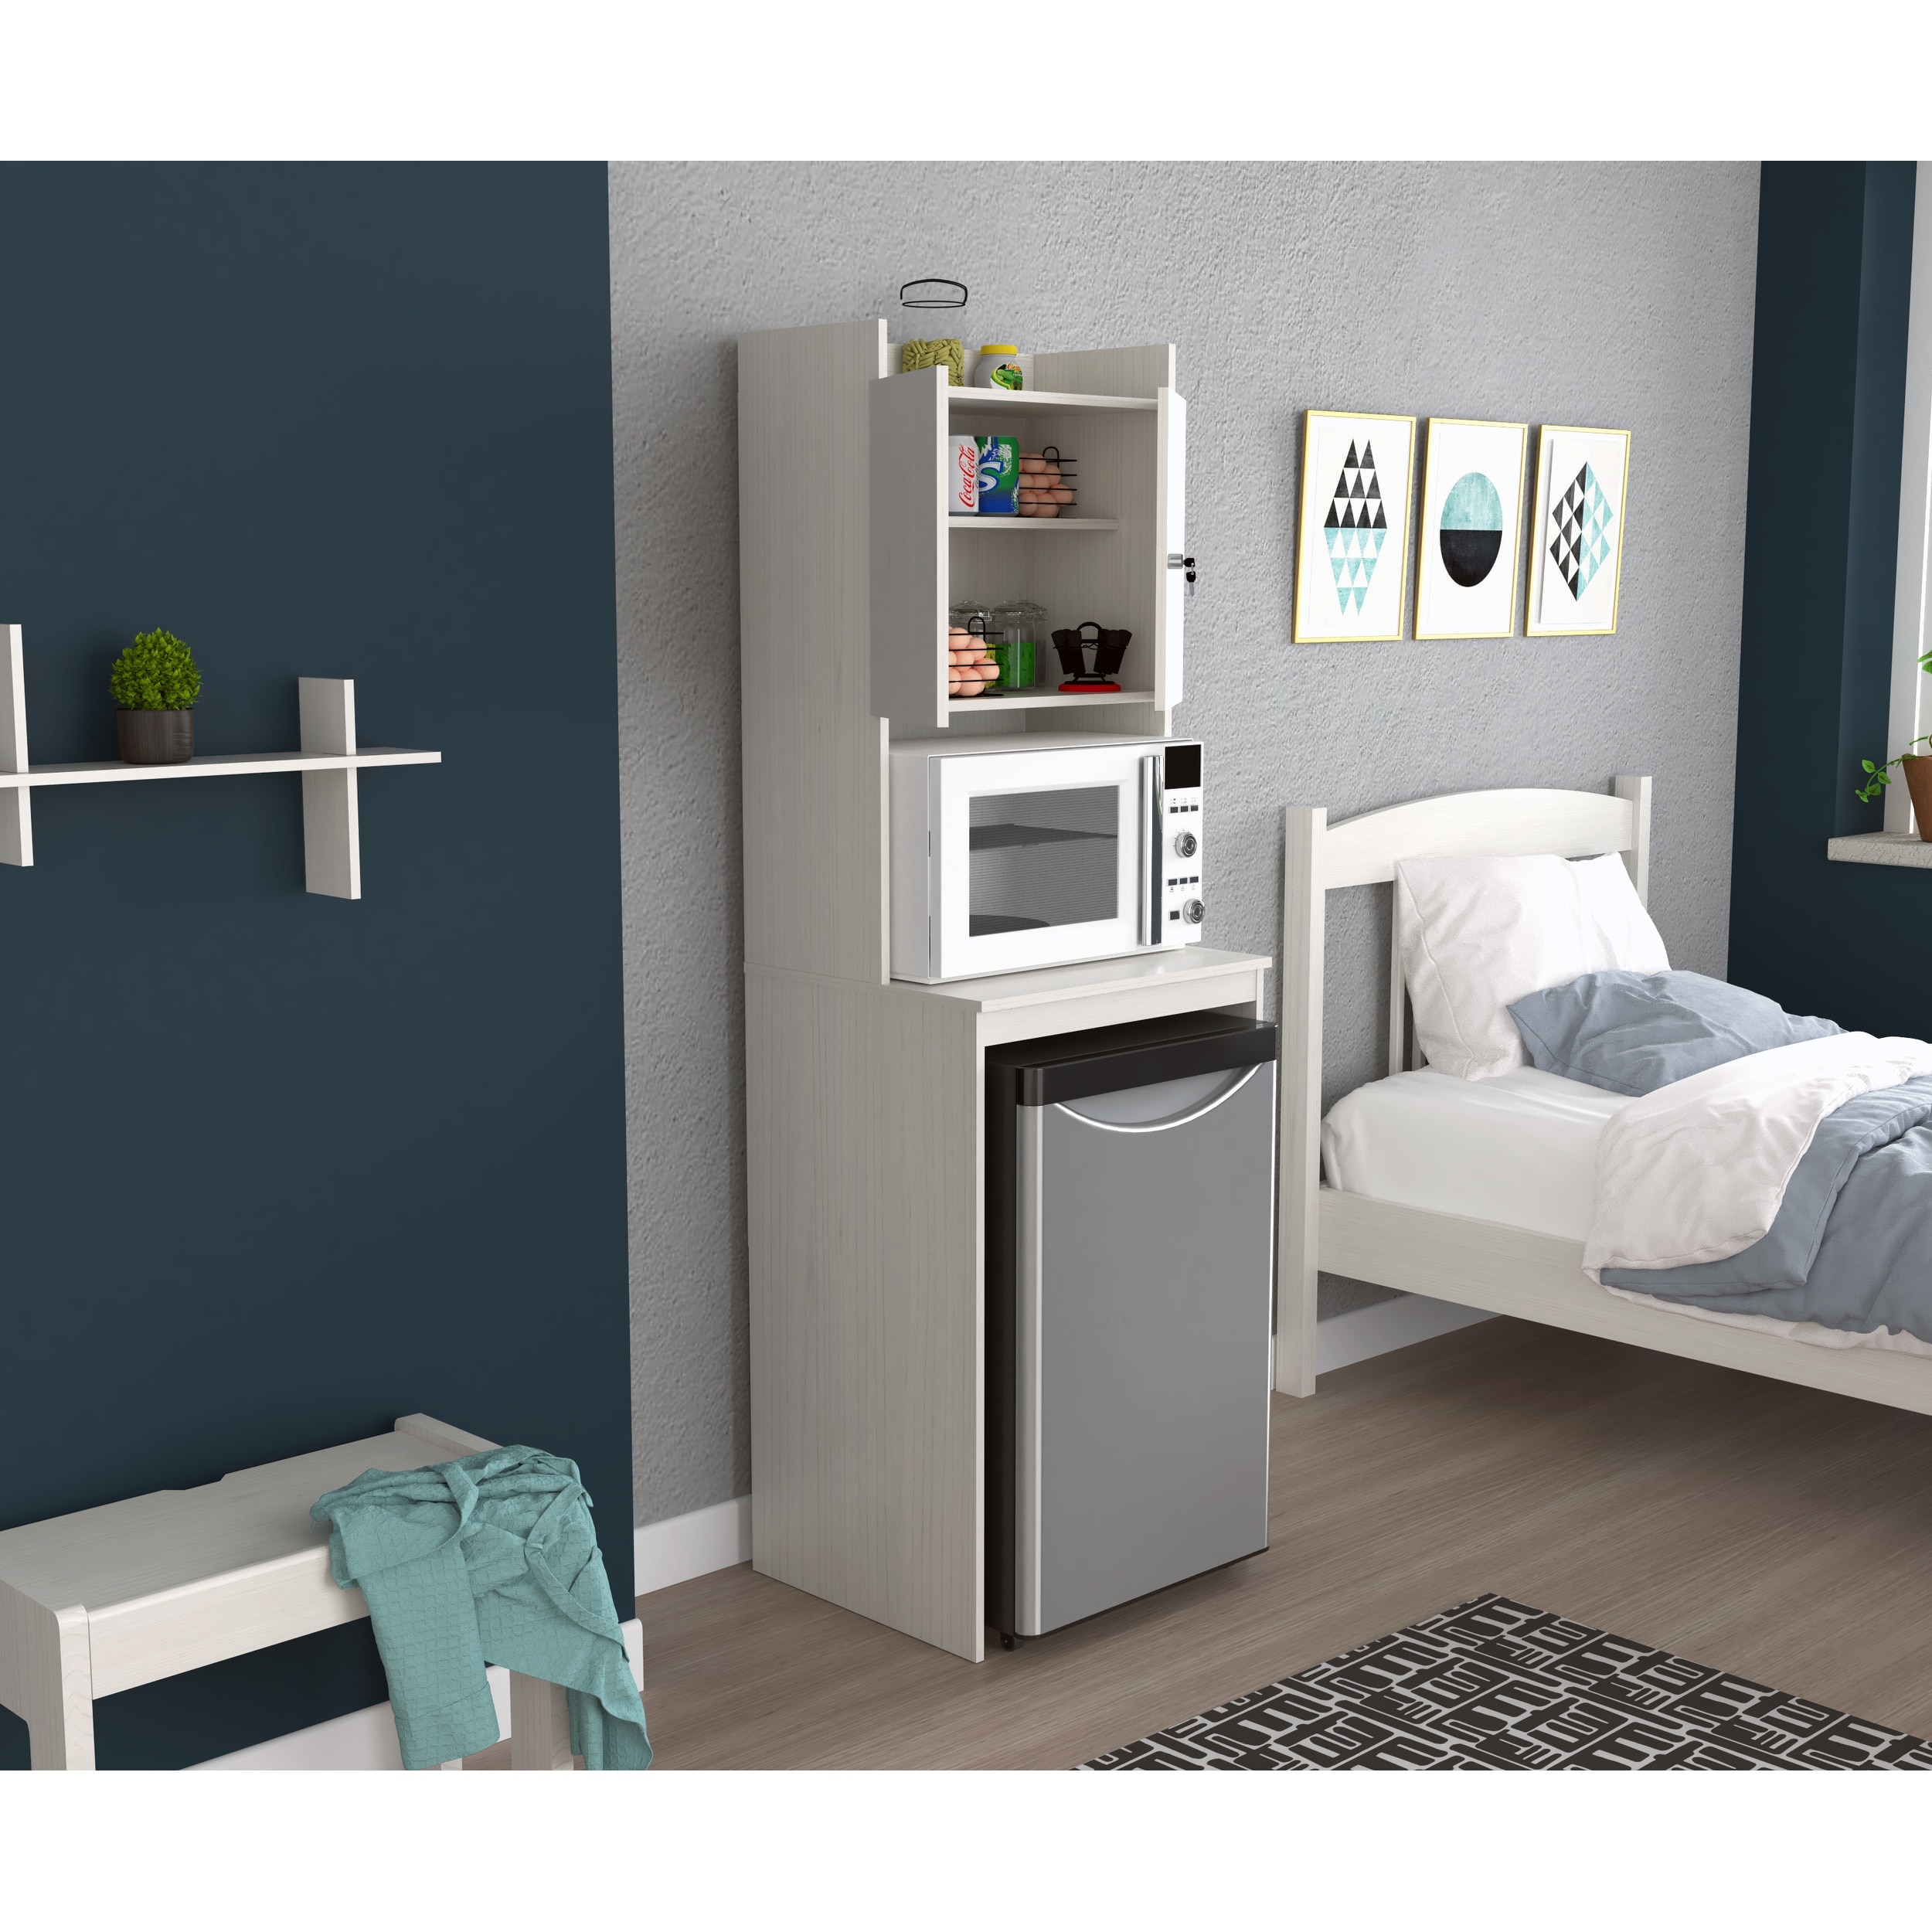 MINI FRIDGE STORAGE Cabinet Microwave Dorm Cart Space Saver Kitchen  Refrigerator $137.49 - PicClick